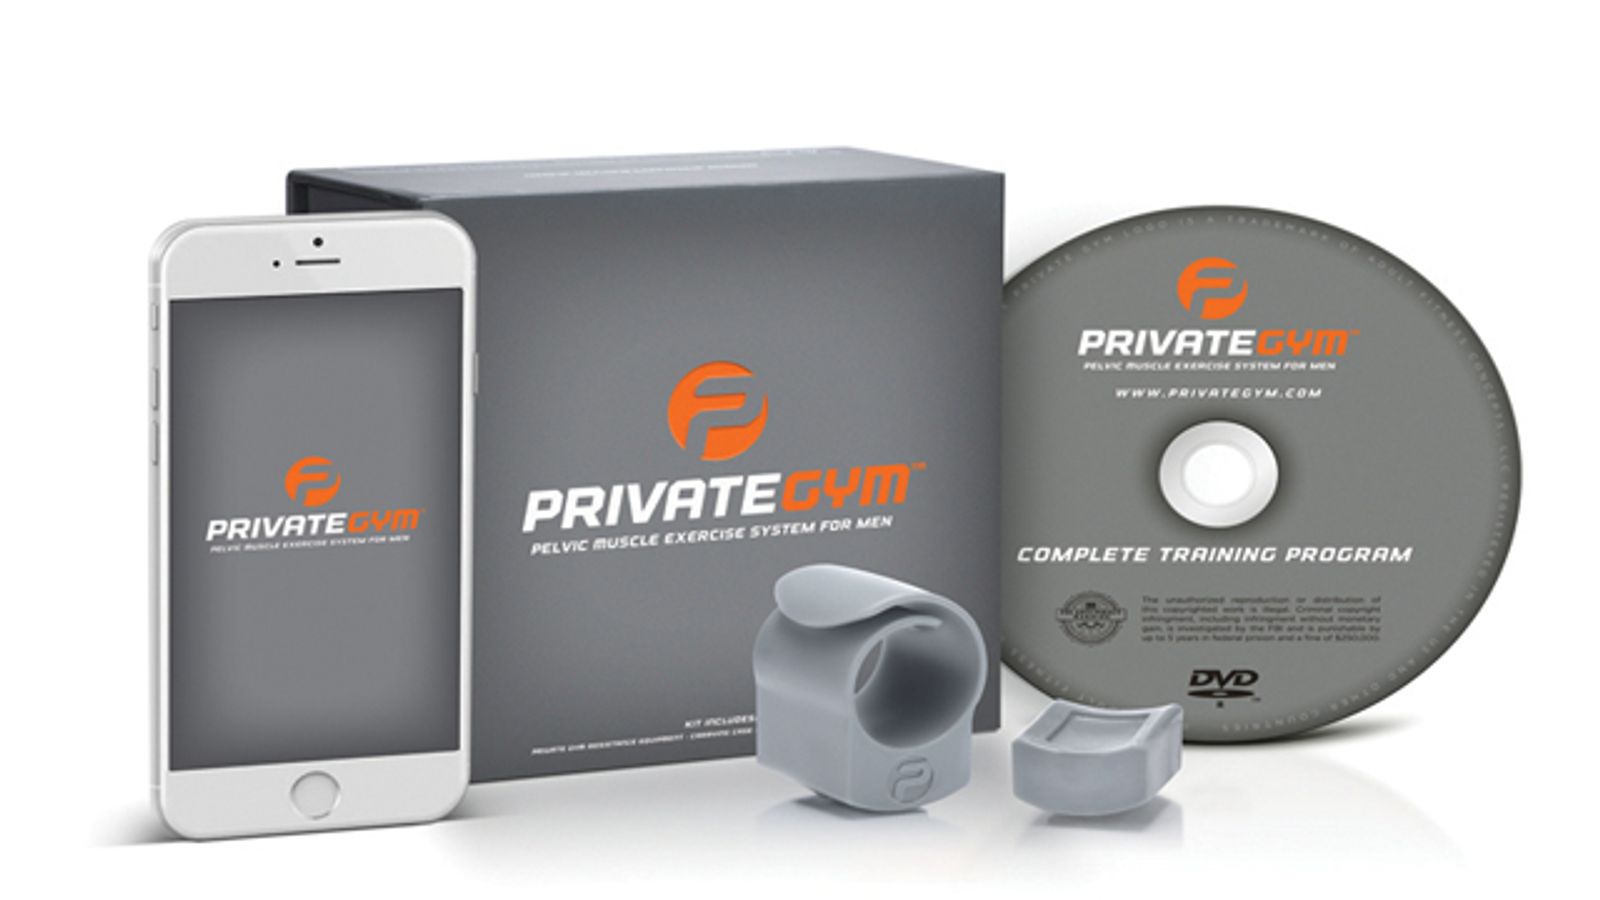 Entrenue Introduces ‘Private Gym’ Kegel Exercise Program for Men